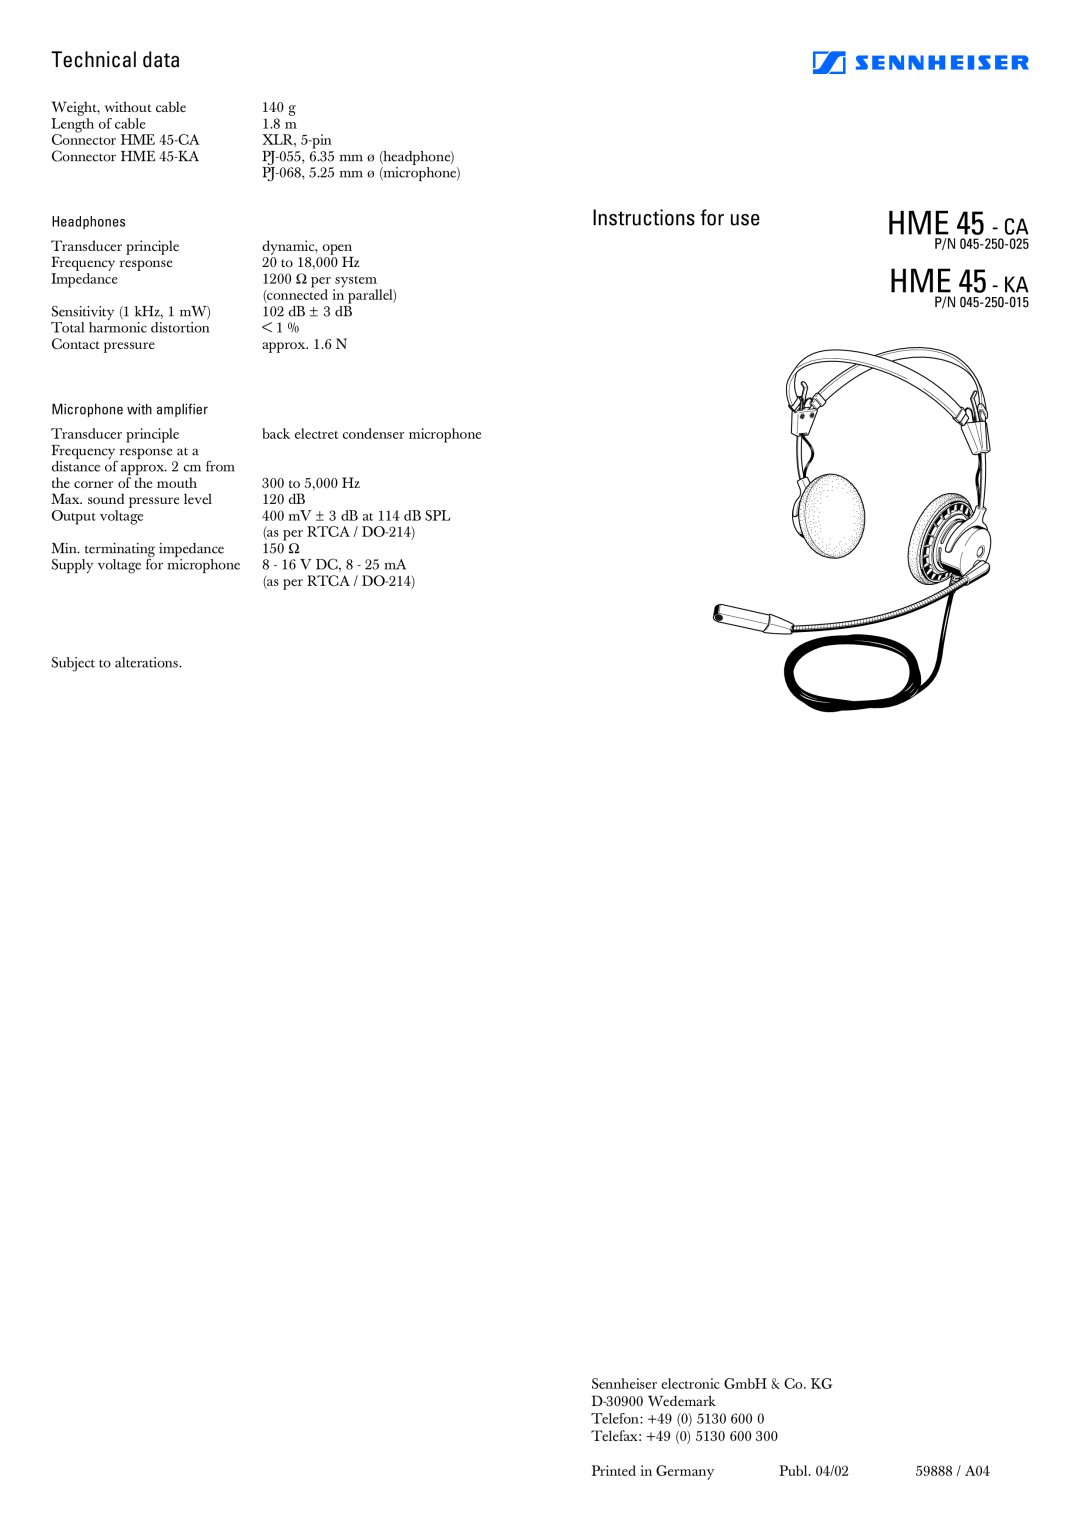 Sennheiser HME 45-CA manual Technical data, Instructions for use, HME 45 - CA, HME 45 - KA 